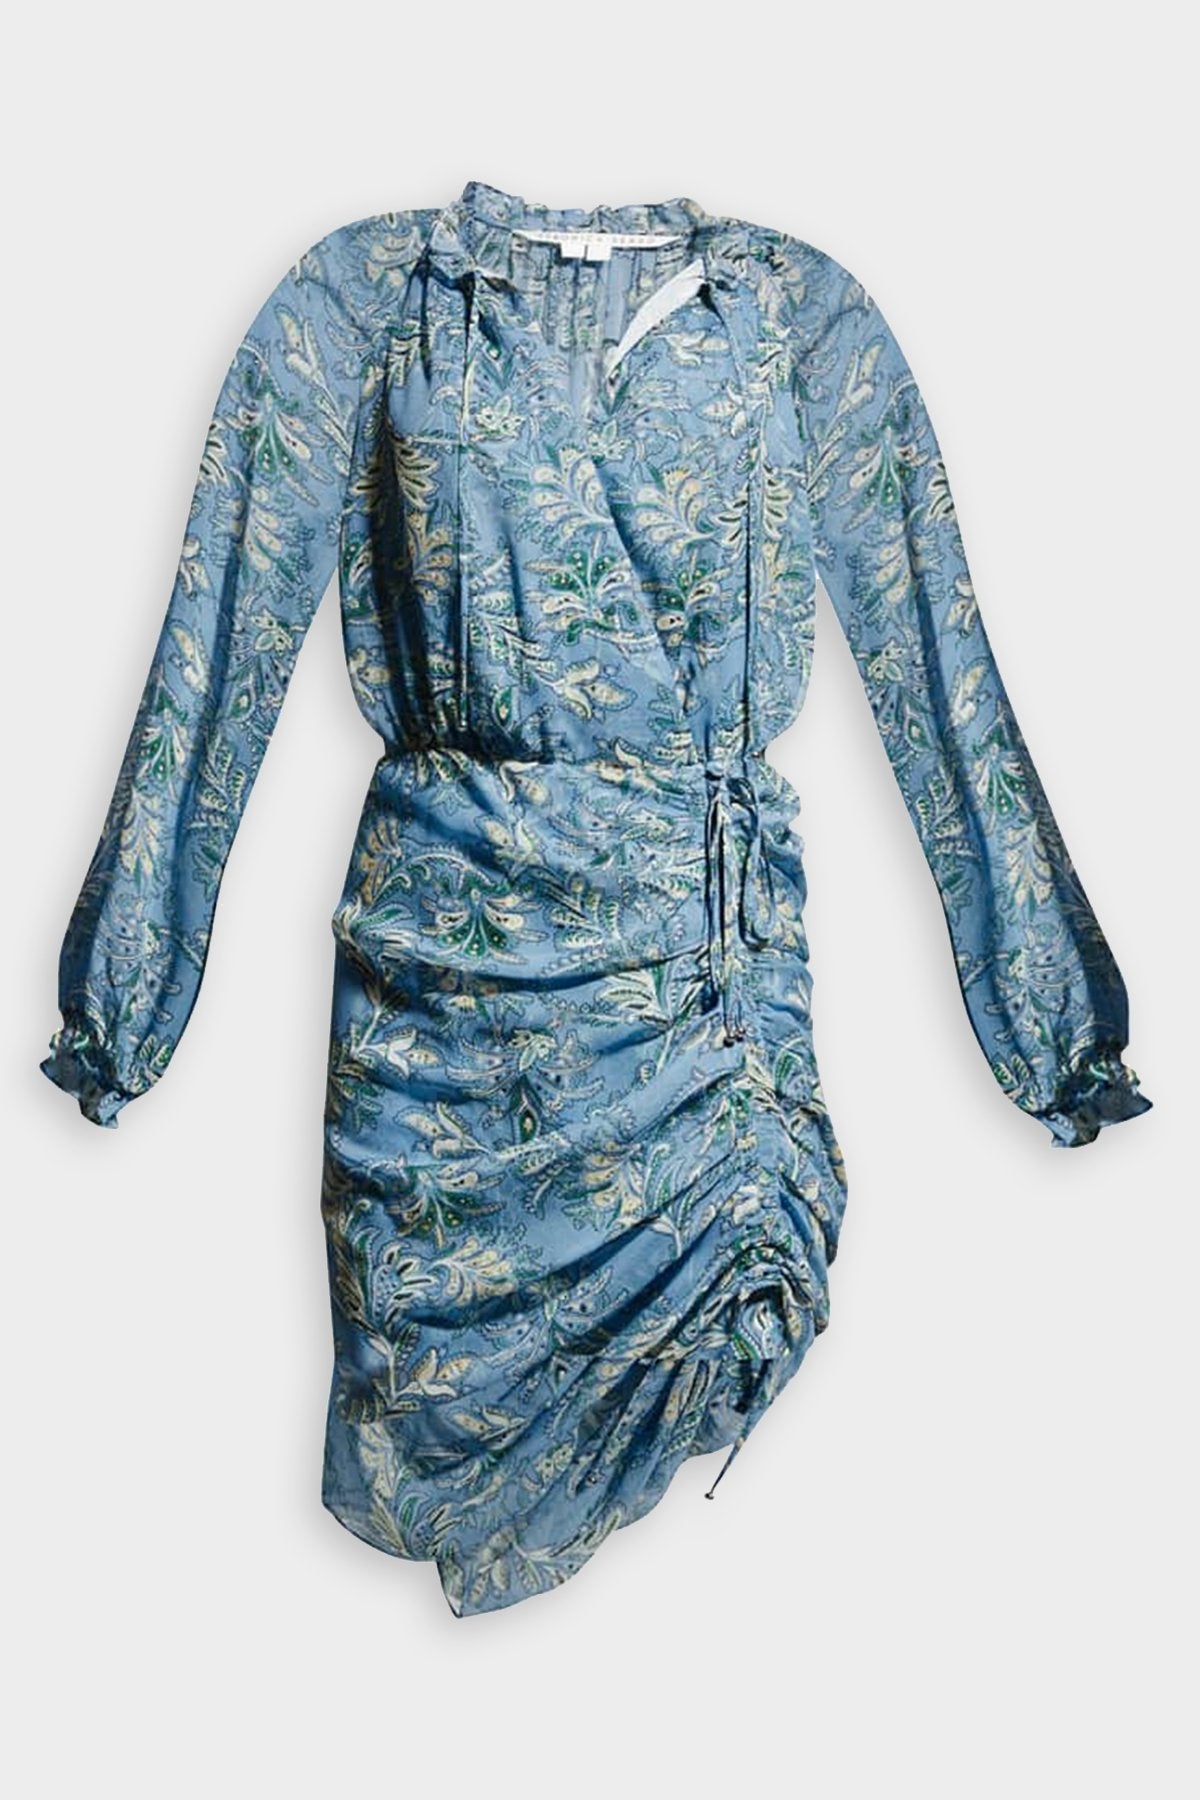 Becky Floral Dress in Aero Blue Multi - shop-olivia.com